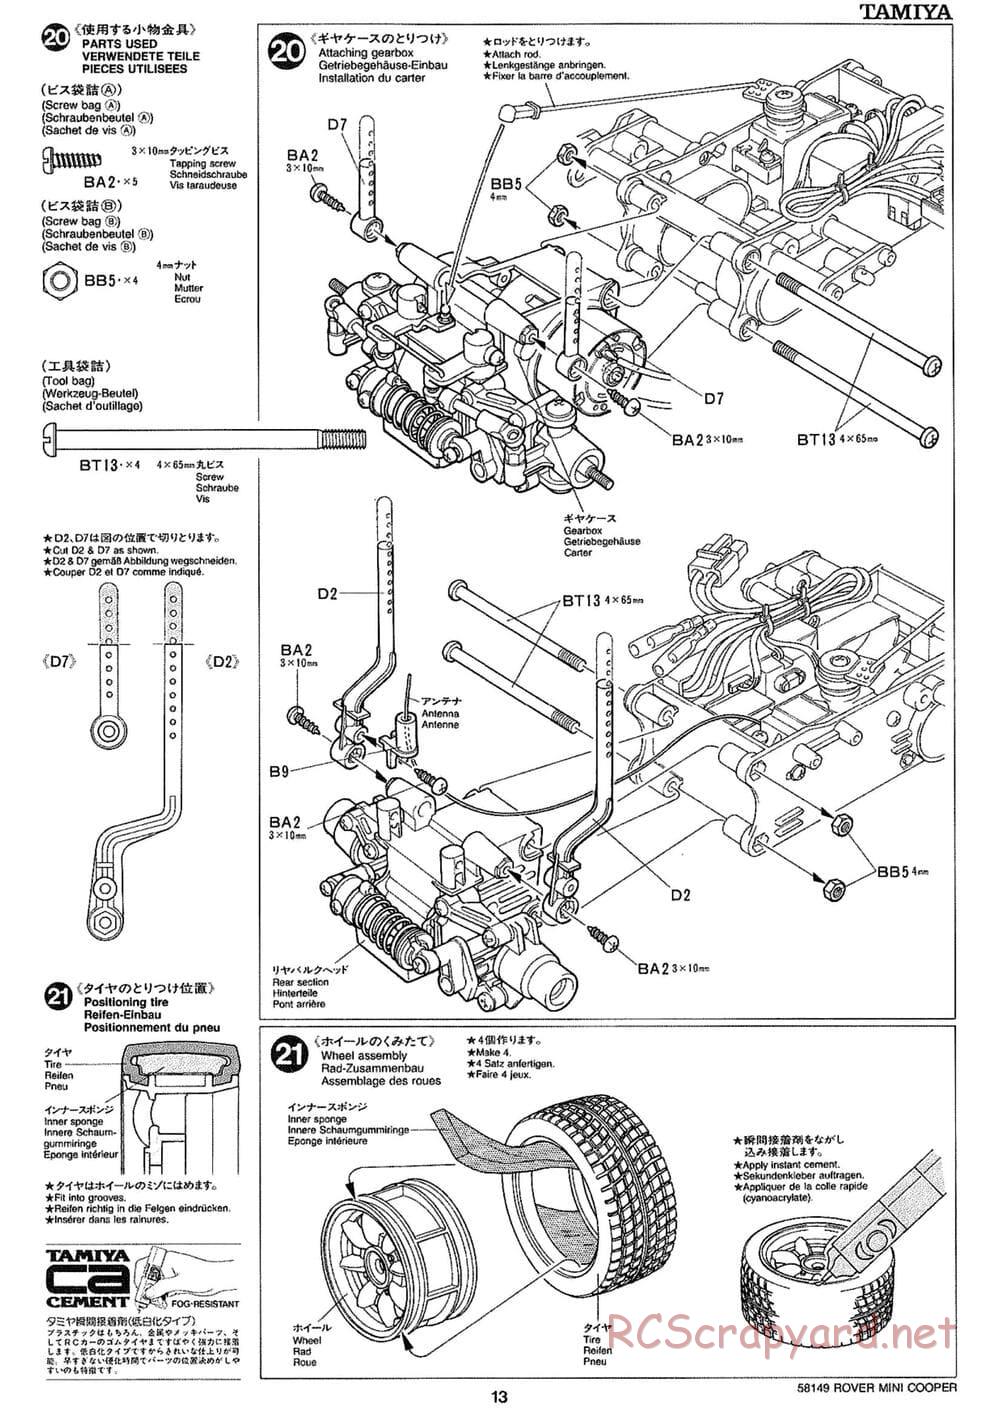 Tamiya - Rover Mini Cooper - M01 Chassis - Manual - Page 13